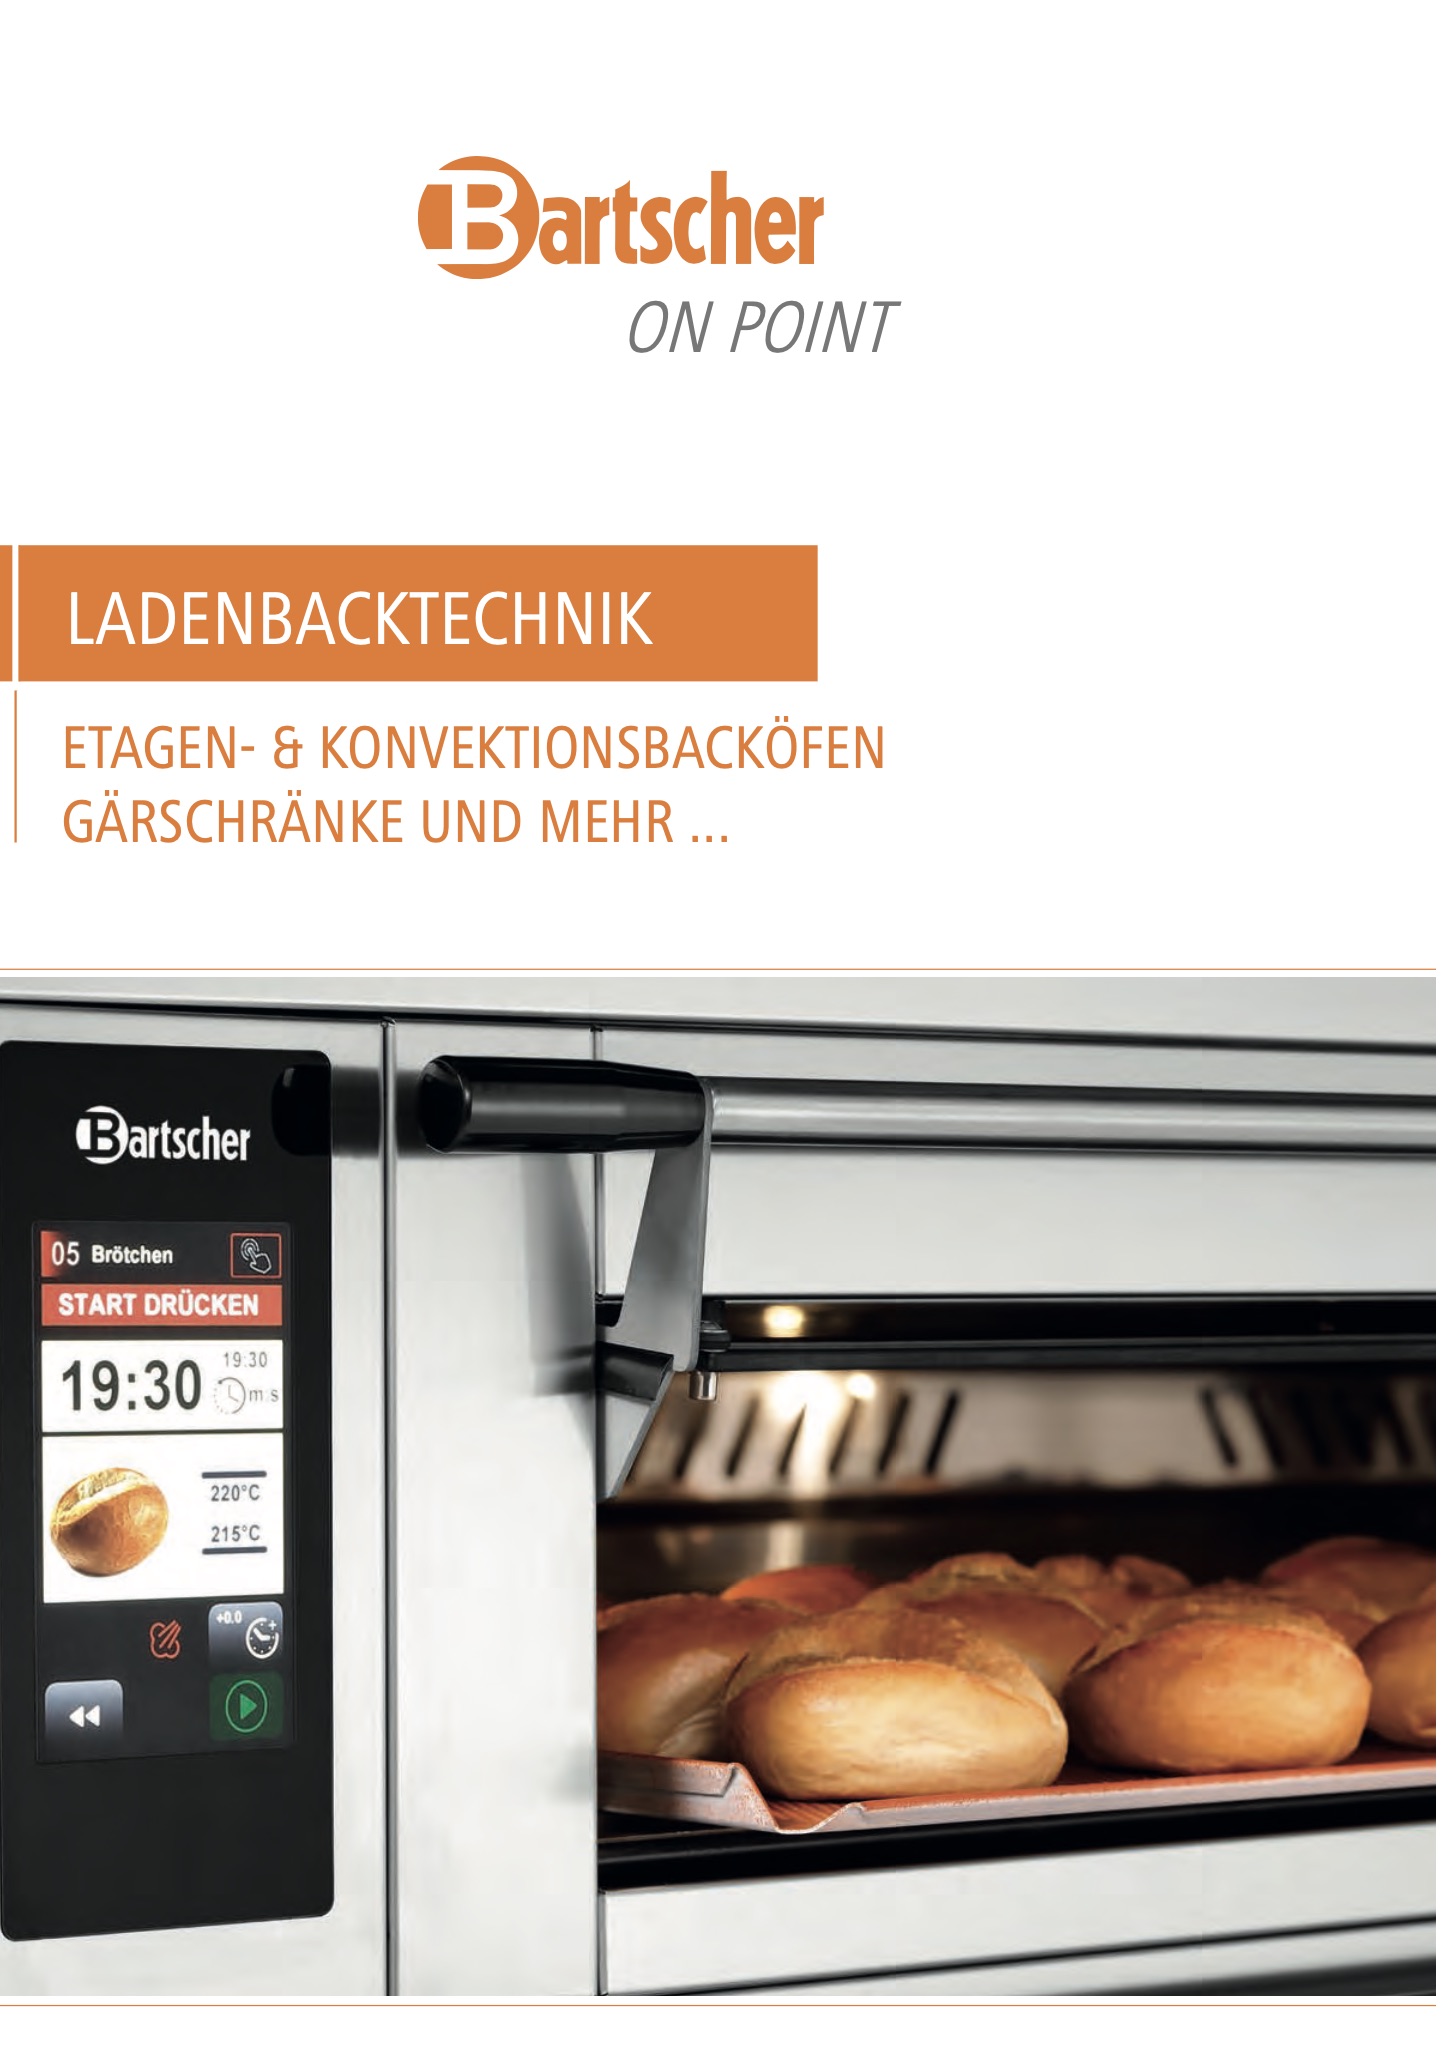 Bartscher Ladenbacktechnik Prospekt PDF